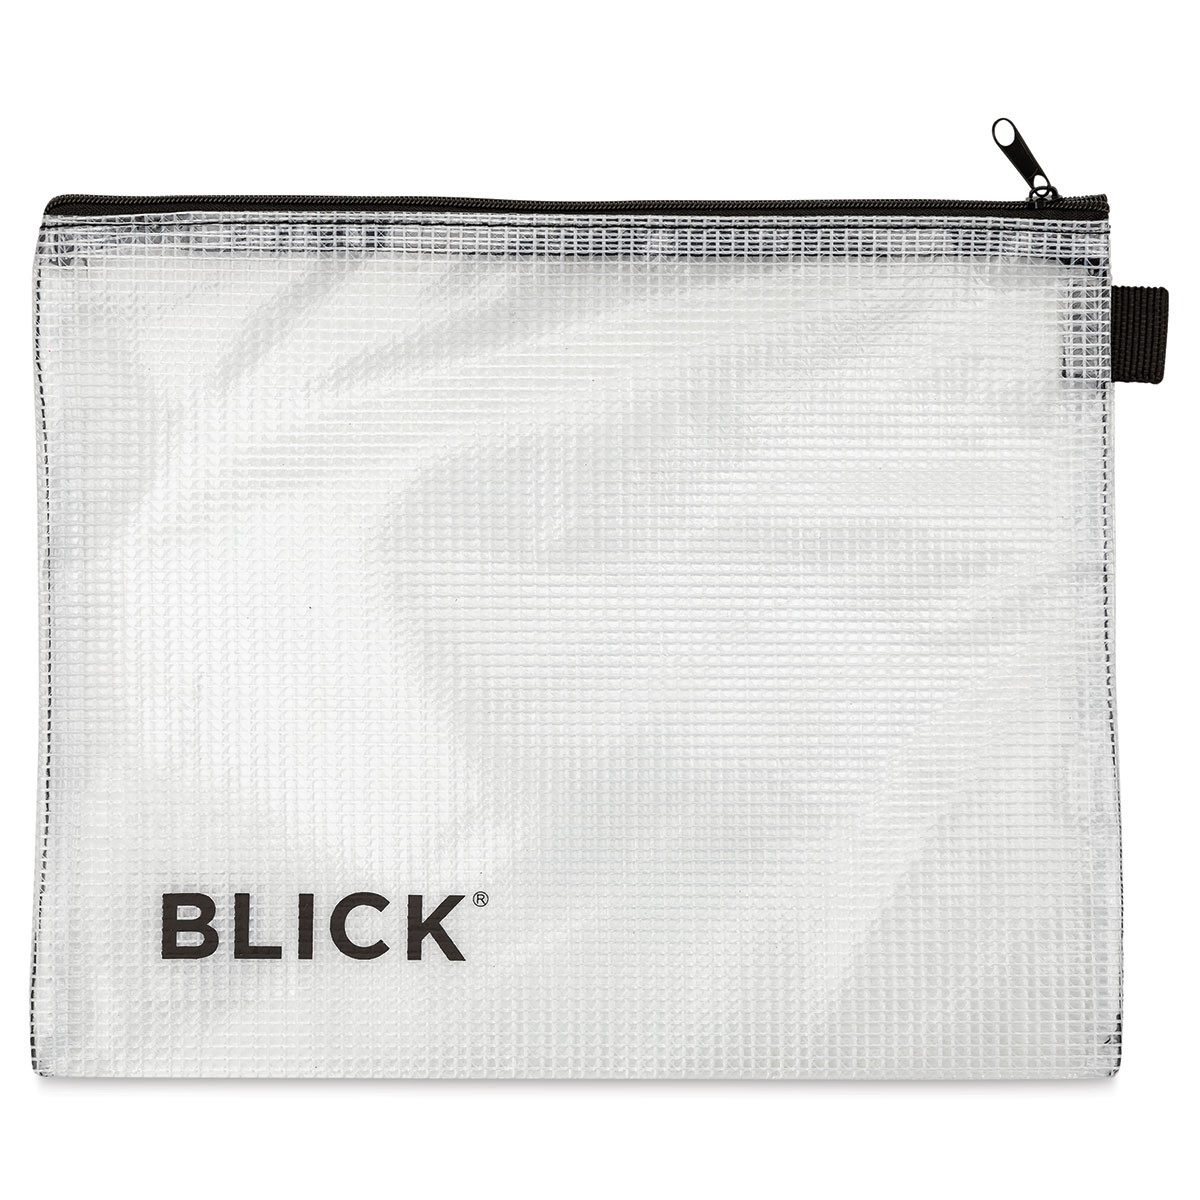 Blick Mesh Zipper Bag - 9-1/2 x 7-1/2